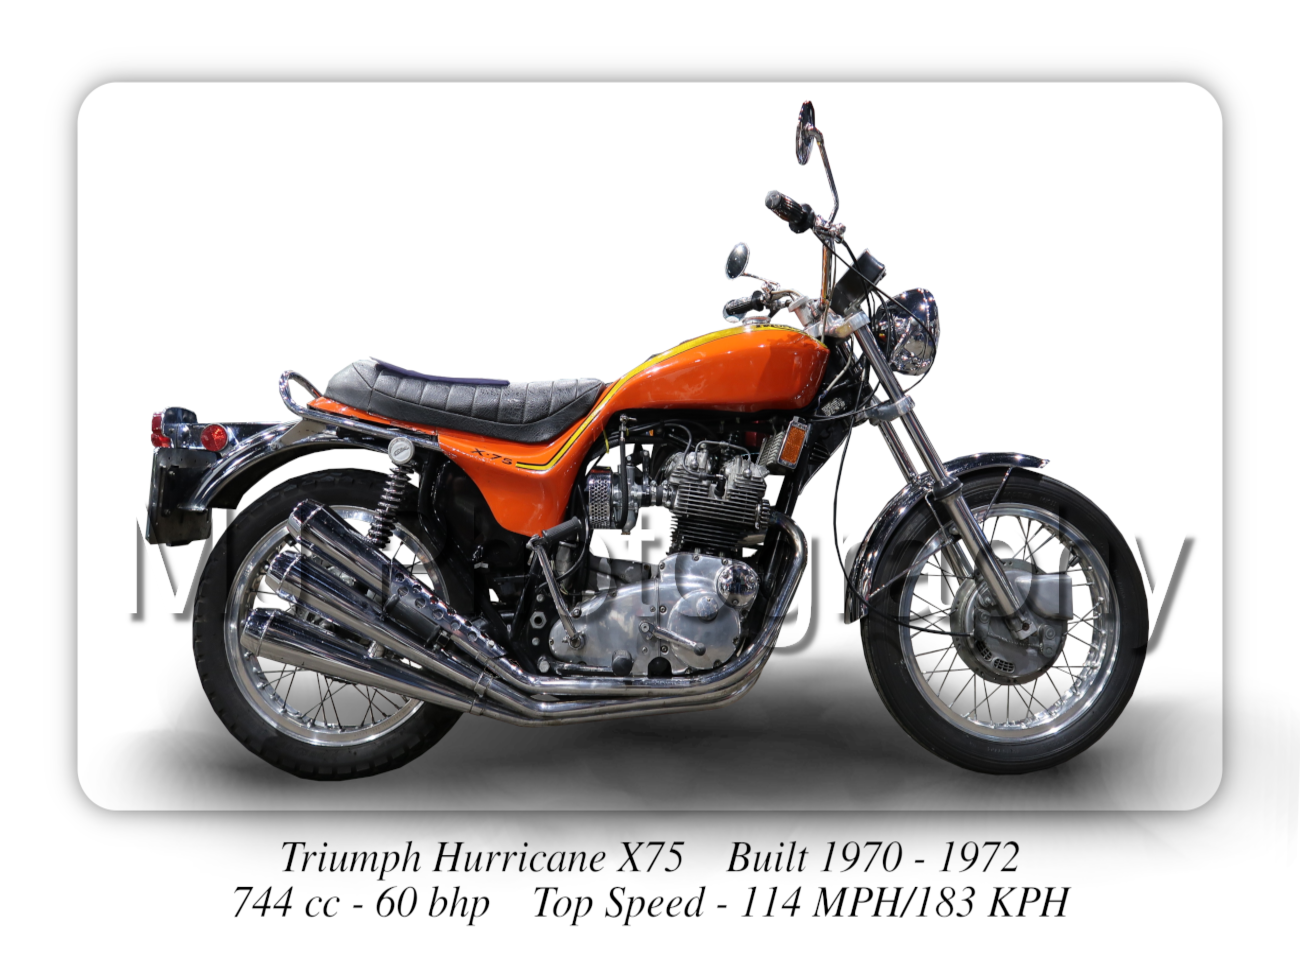 Triumph Hurricane X75 Motorcycle - A3/A4 Size Print Poster